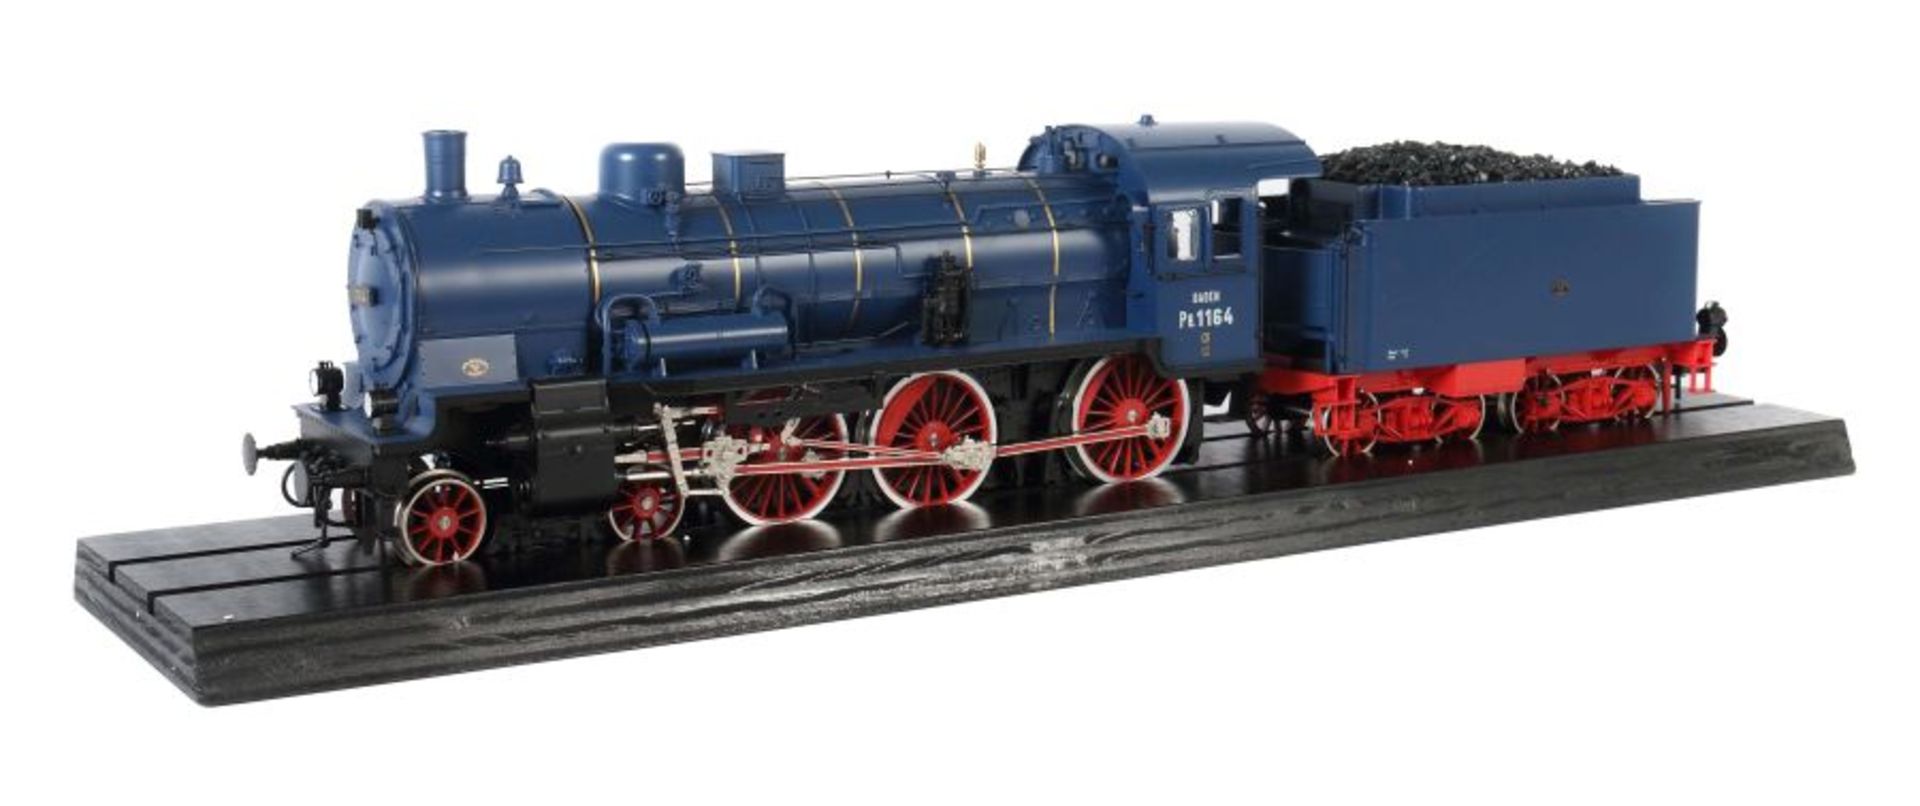 Badische Dampflok P8 Märklin, Modellnr. 55981, Spur 1, Replika, 3-5/-achsige Lokomotive mit 4-